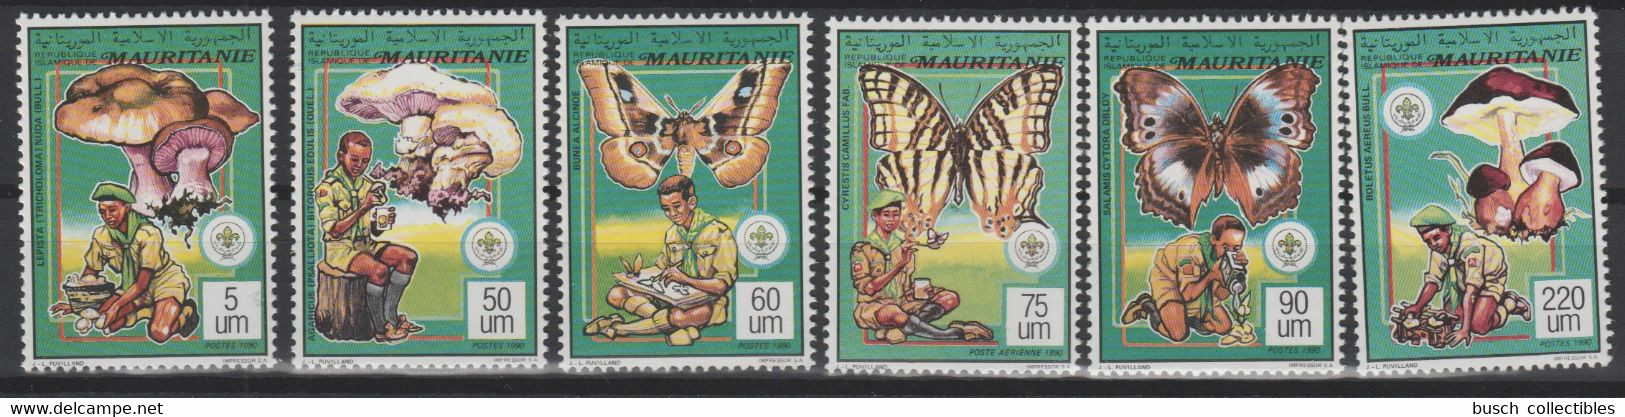 Mauritanie Mauretanien Mauritania 1990 / 1991 Mi. 987 - 992 Scoutisme Scouts Pfadfinder Papillon Schmetterling Butterfly - Mauritania (1960-...)